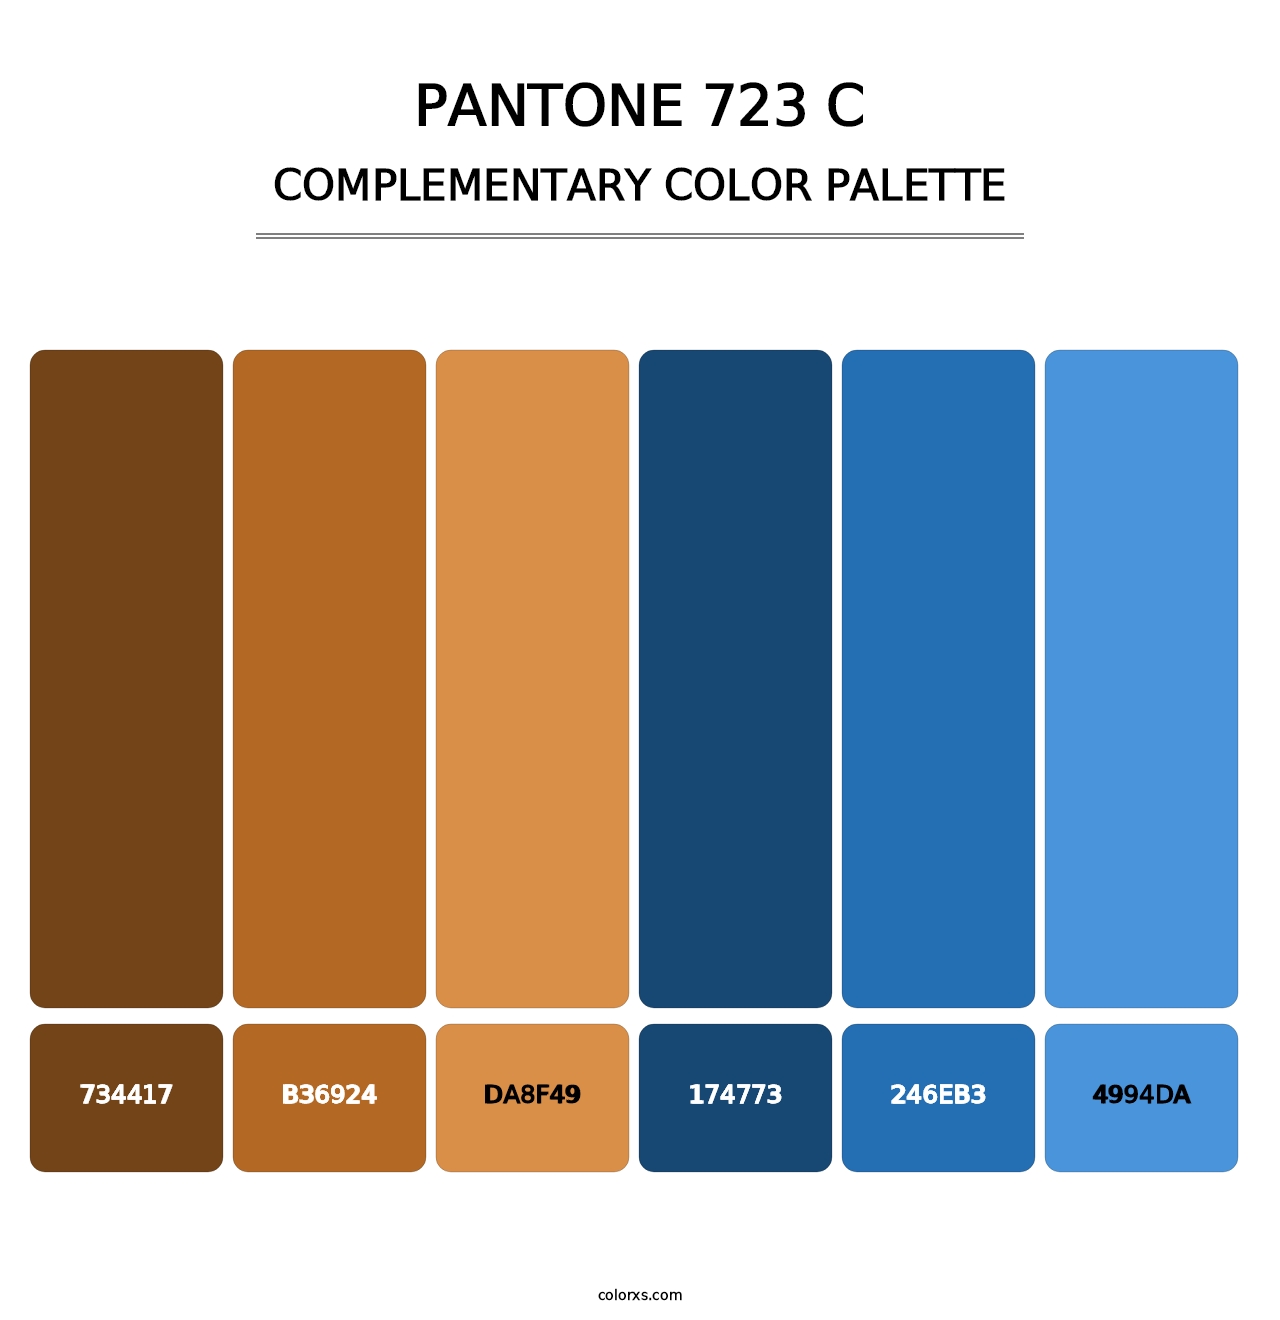 PANTONE 723 C - Complementary Color Palette